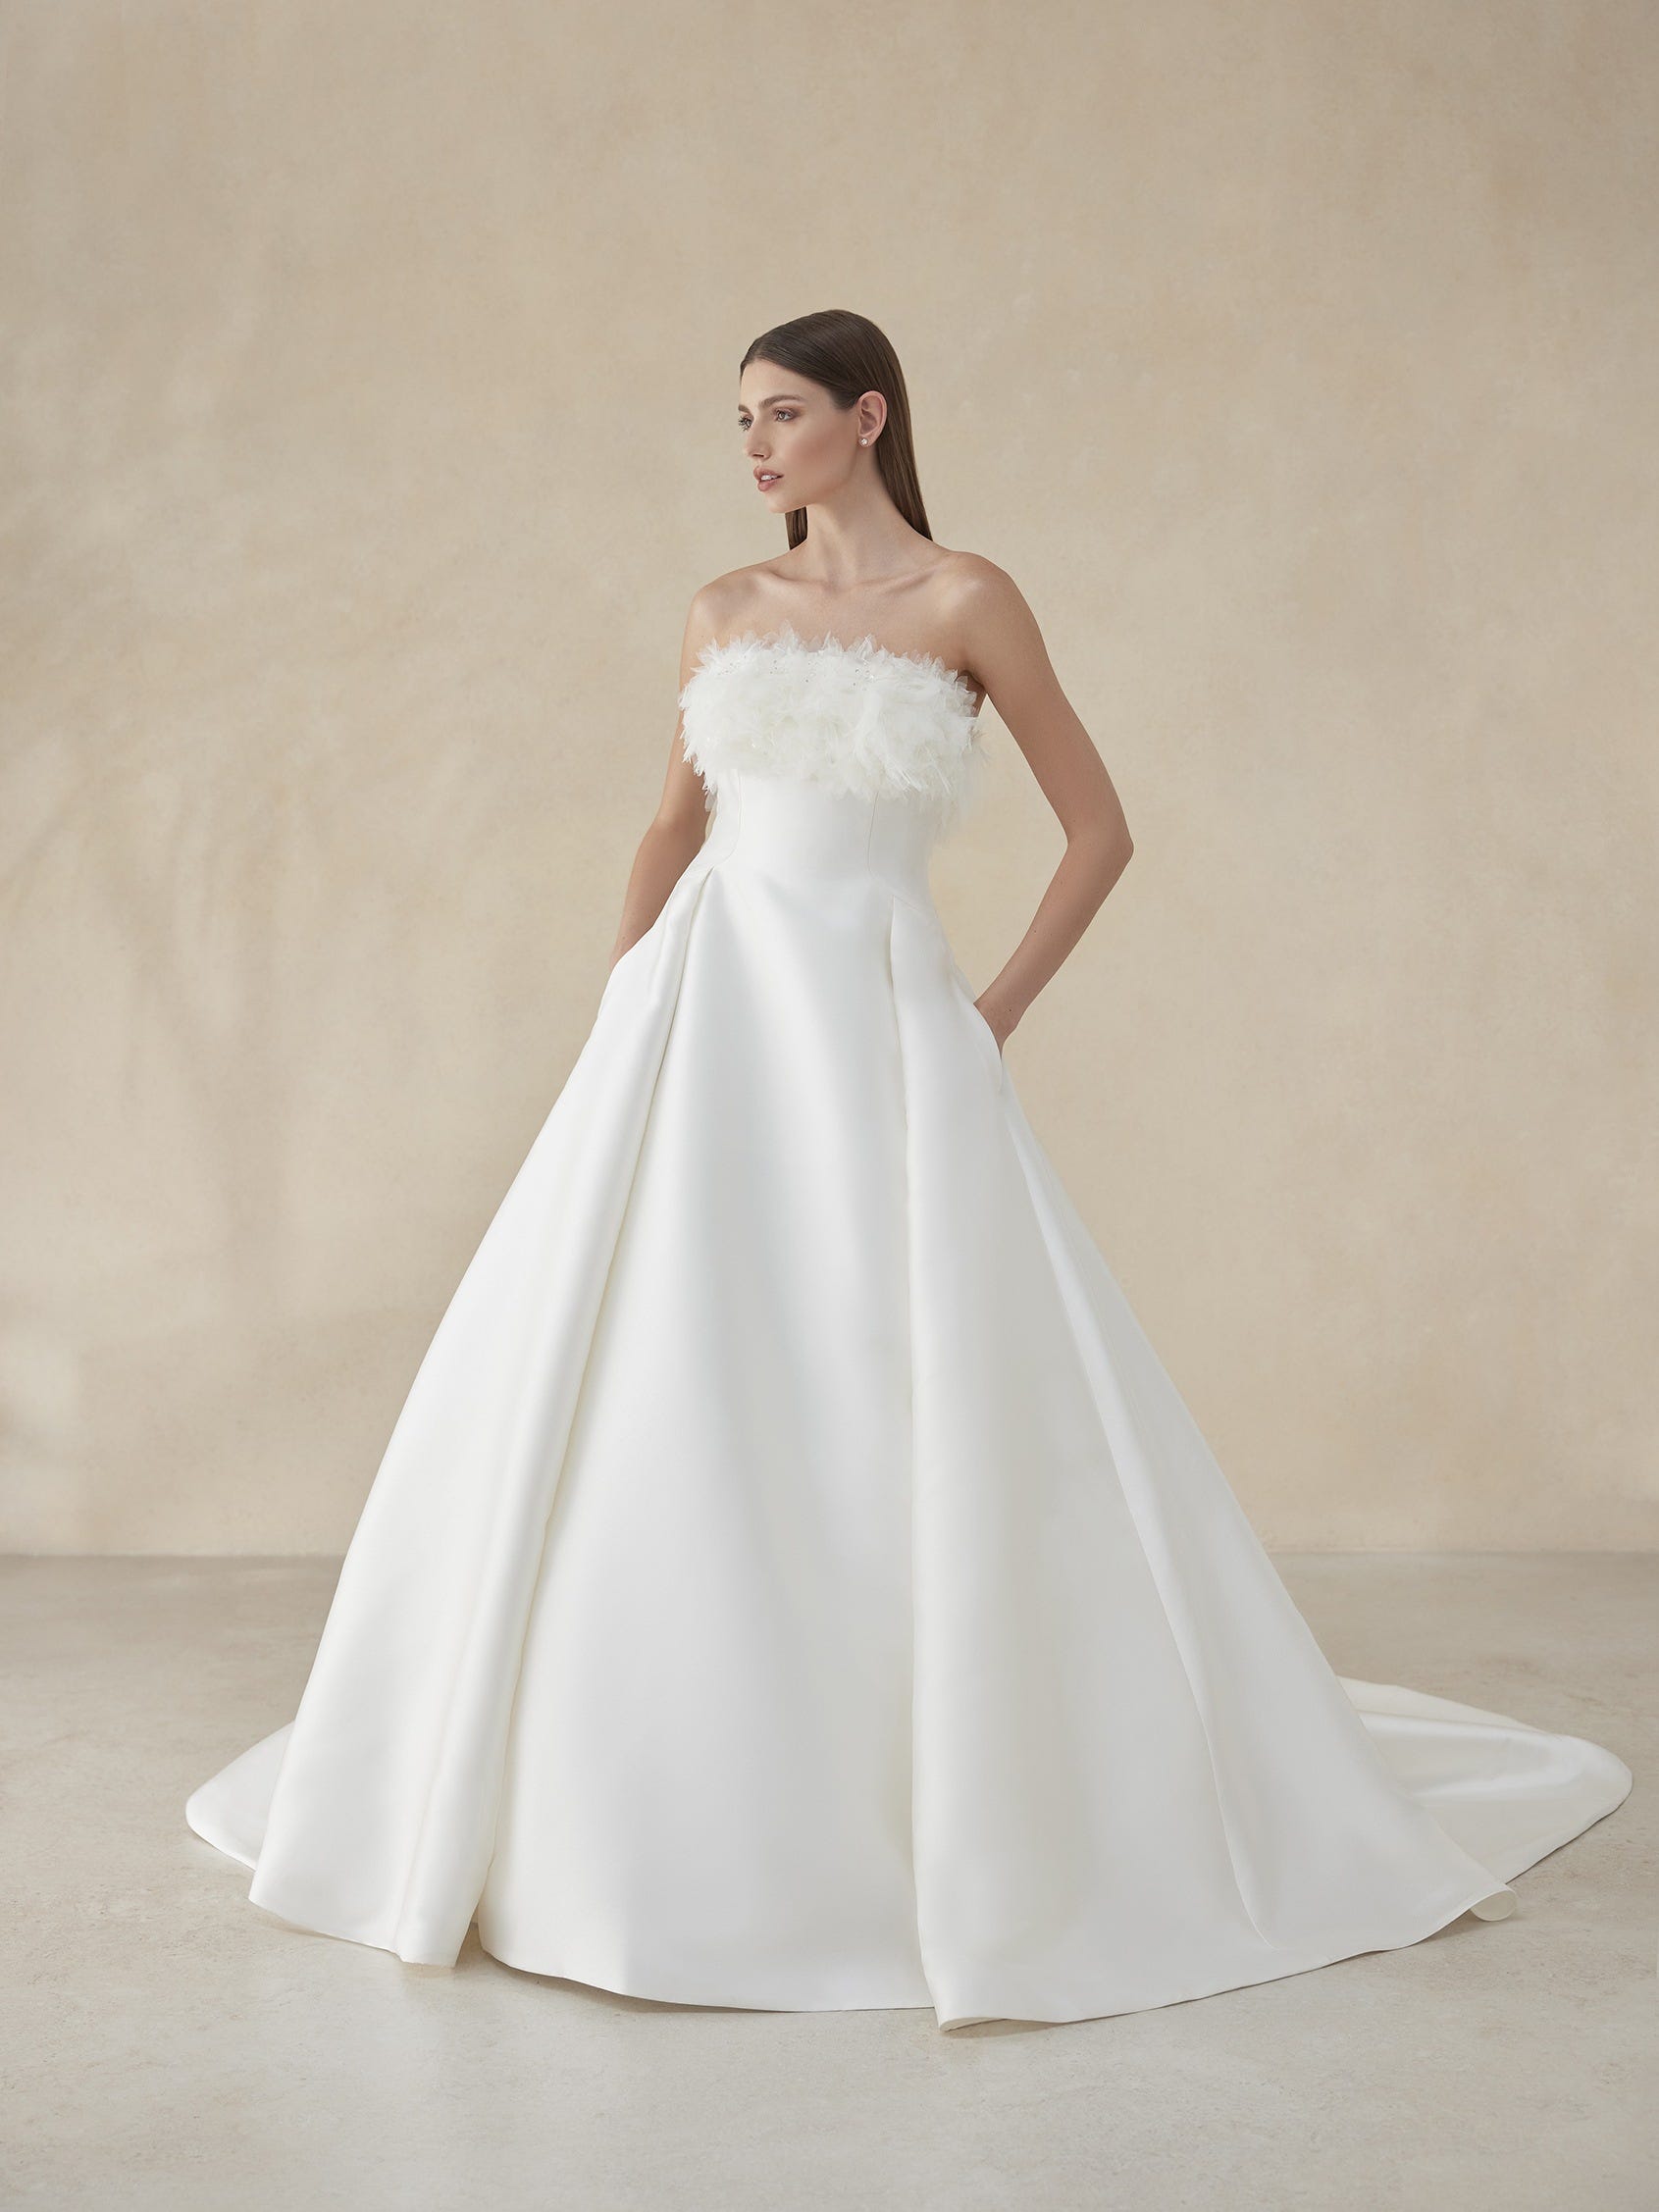 Blog grid - Sidai Brides: Designer Wedding Dresses & Gowns